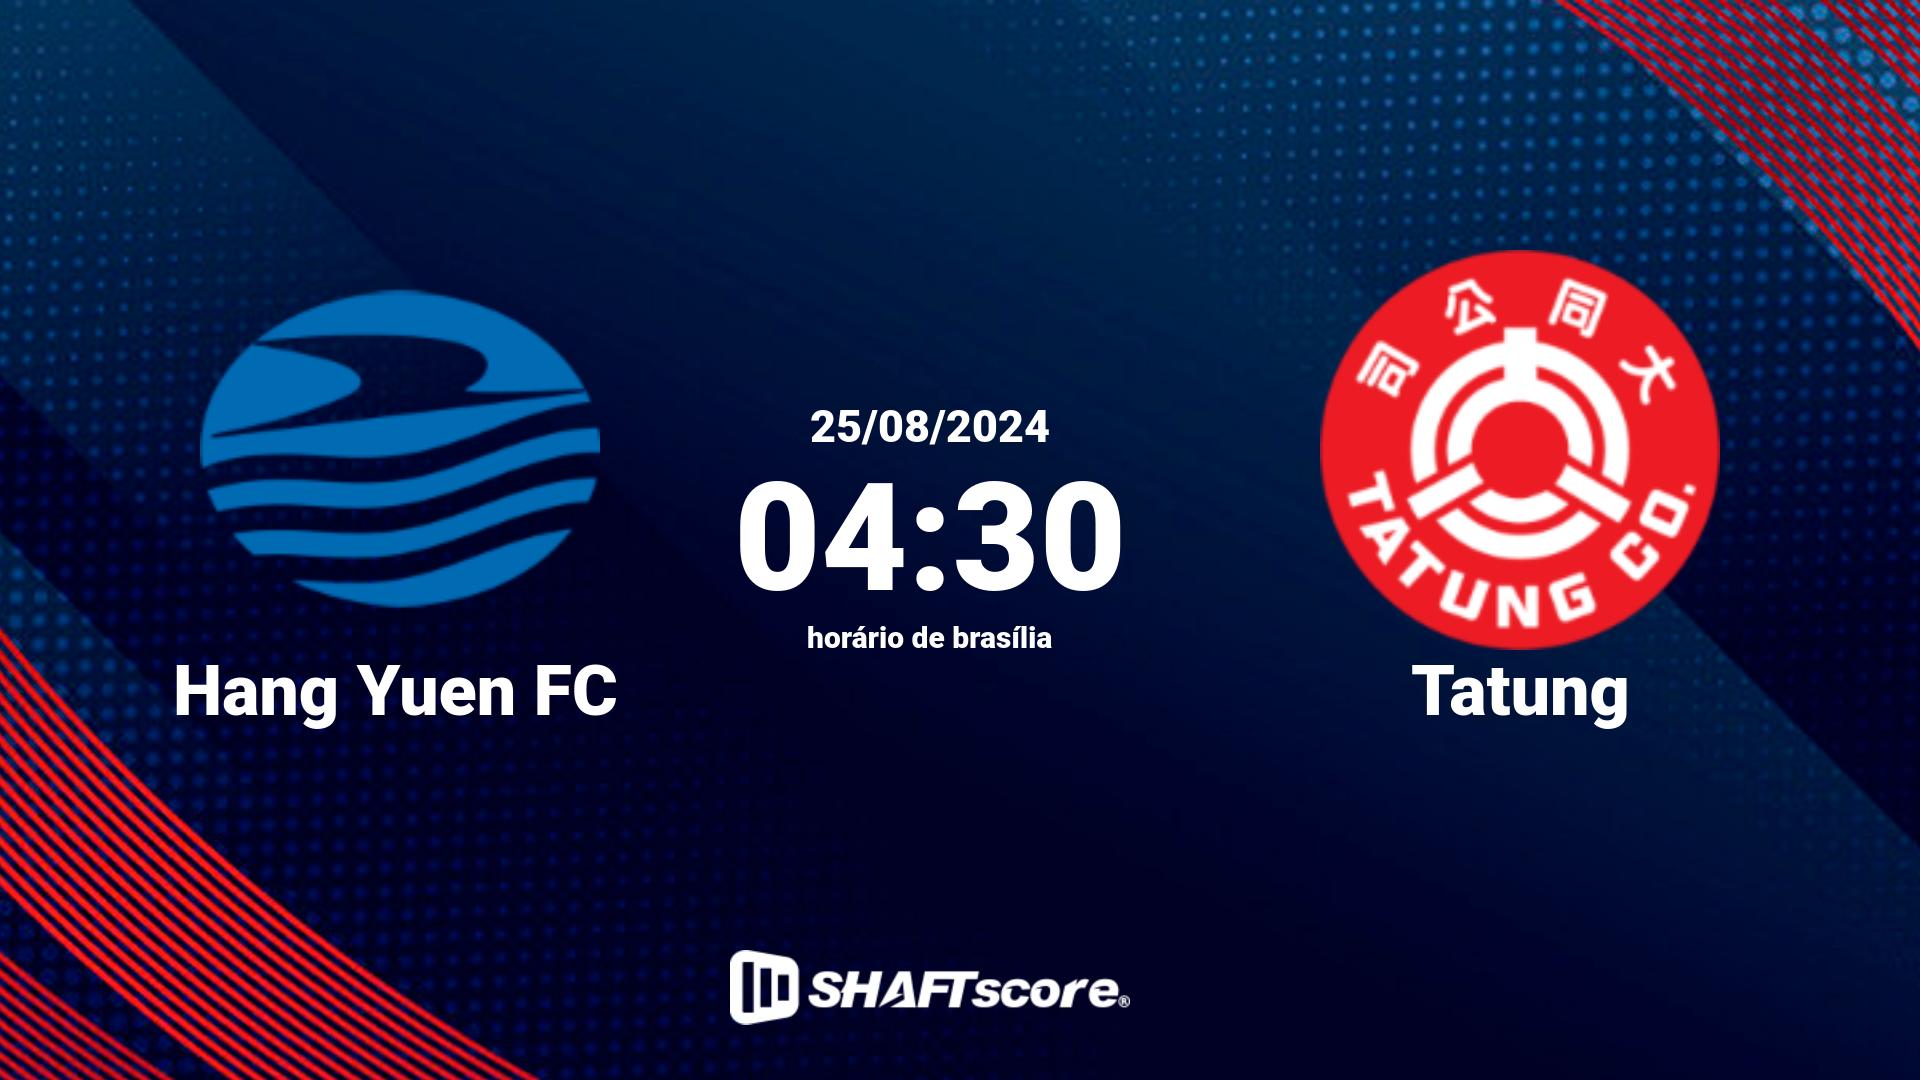 Estatísticas do jogo Hang Yuen FC vs Tatung 25.08 04:30